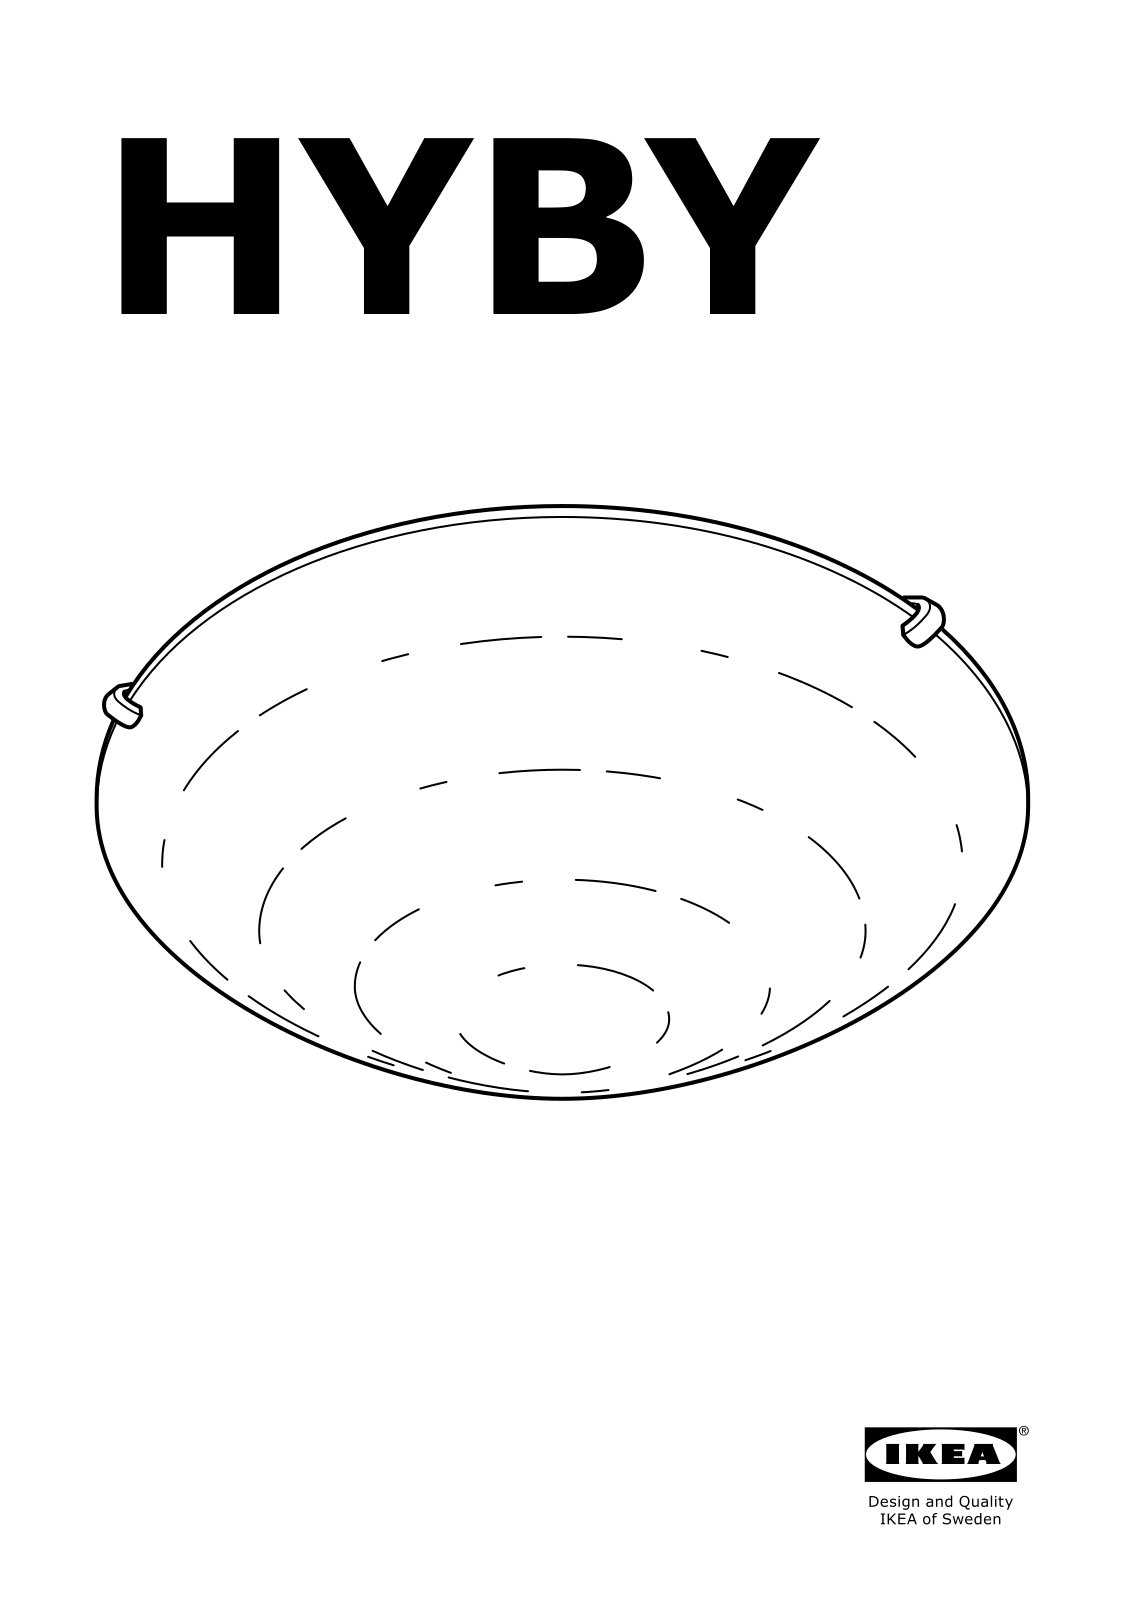 IKEA HYBY User Manual